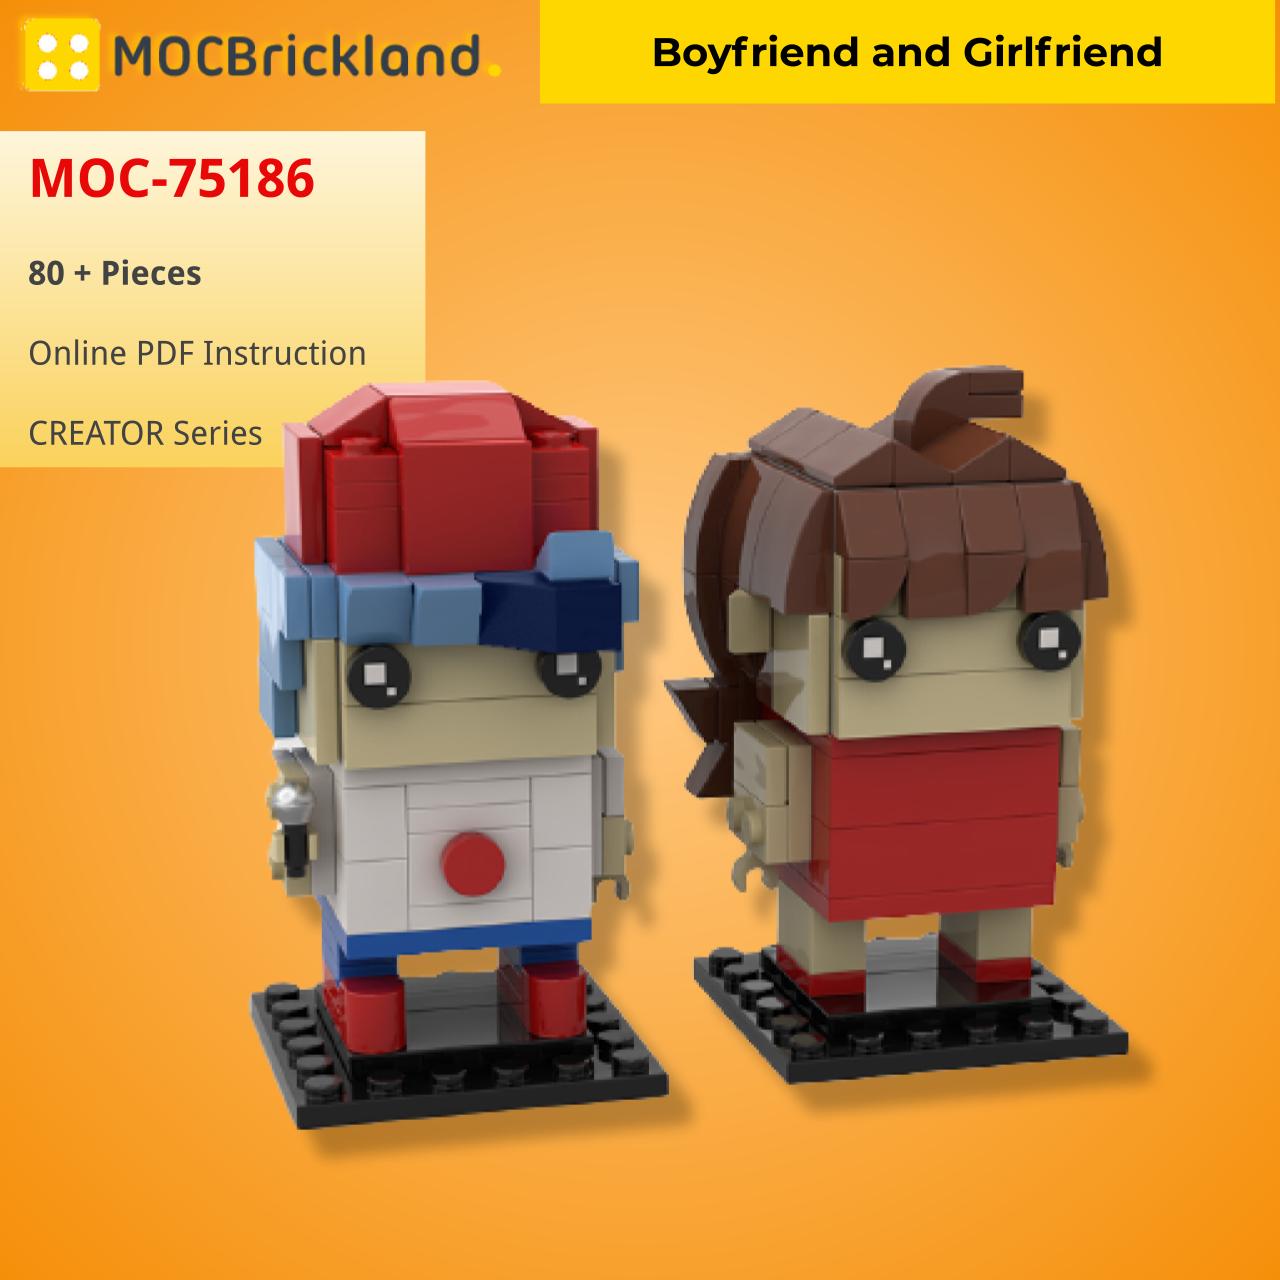 creator moc 75186 boyfriend and girlfriend by thrawnsrevenge mocbrickland 1495